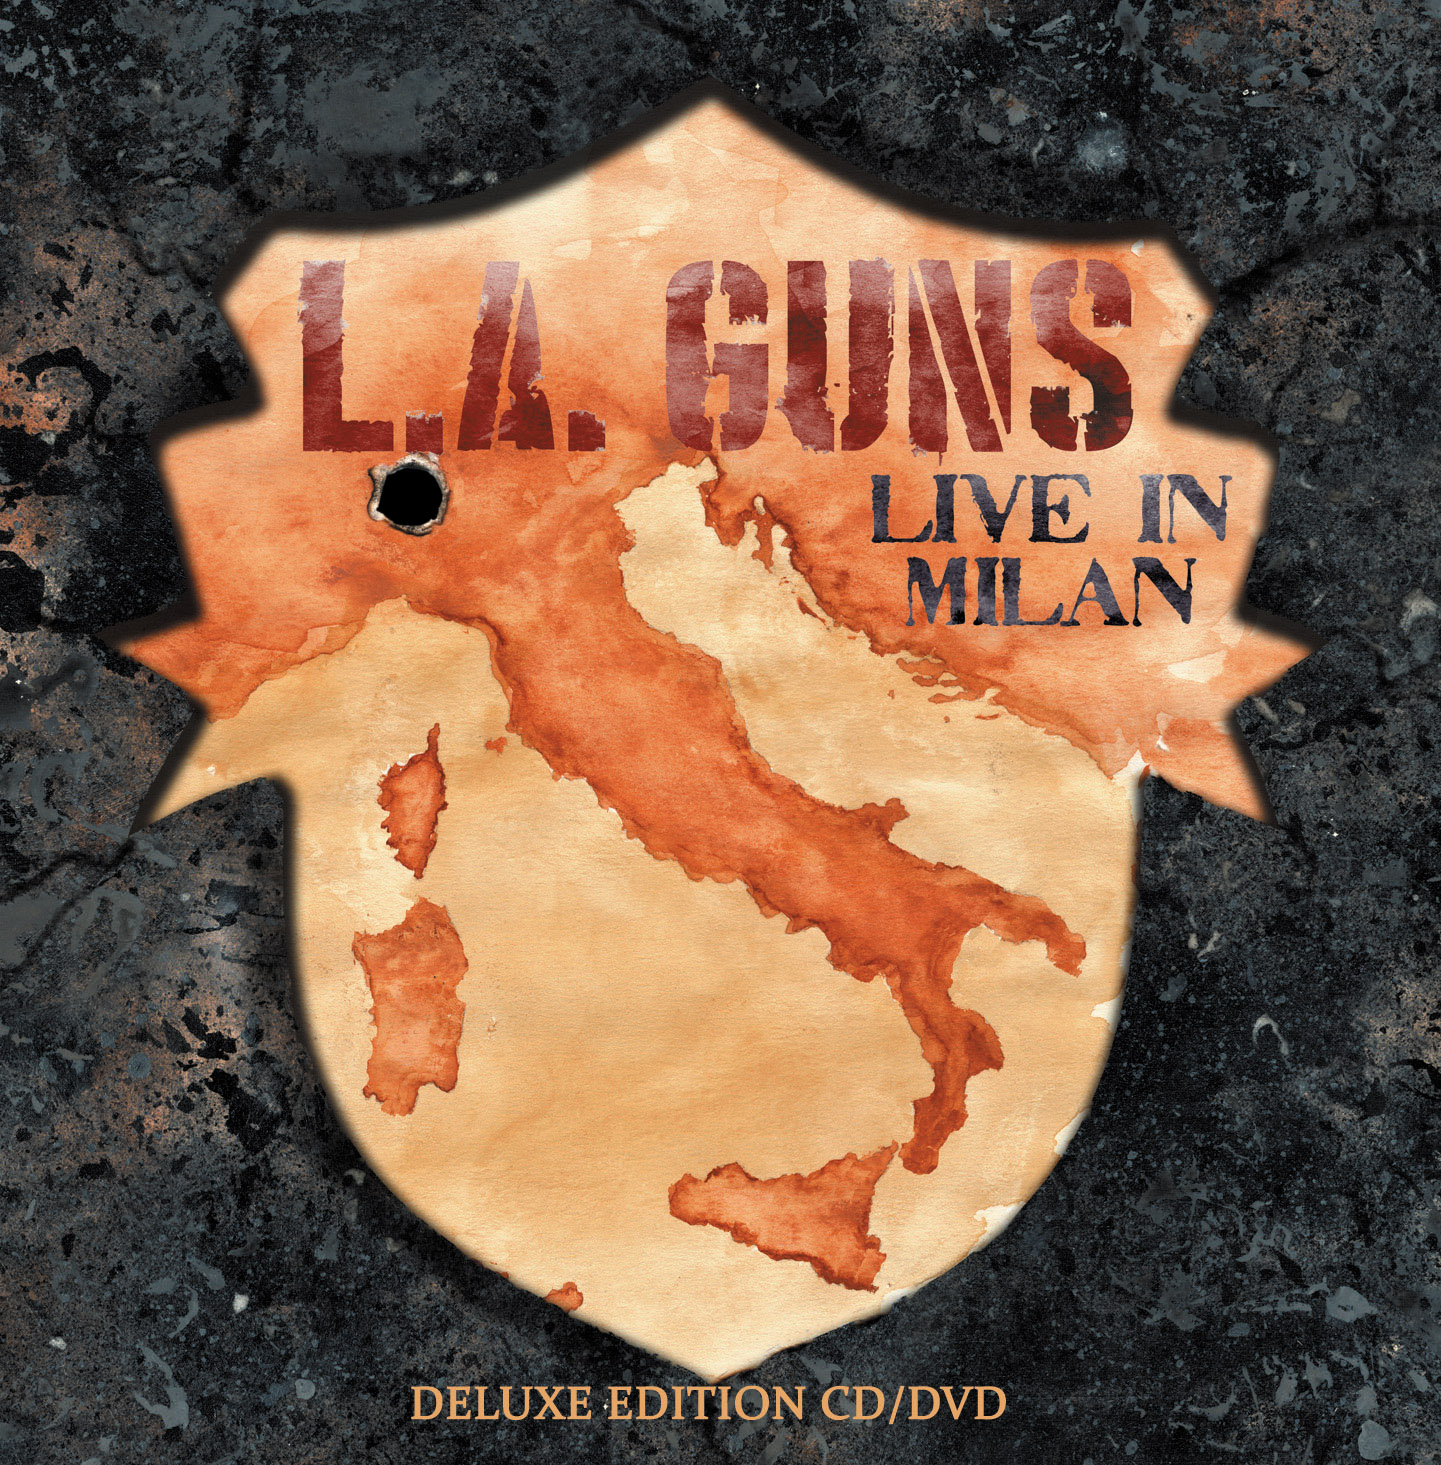 L.A. Guns - Made In Milan - CD+DVD